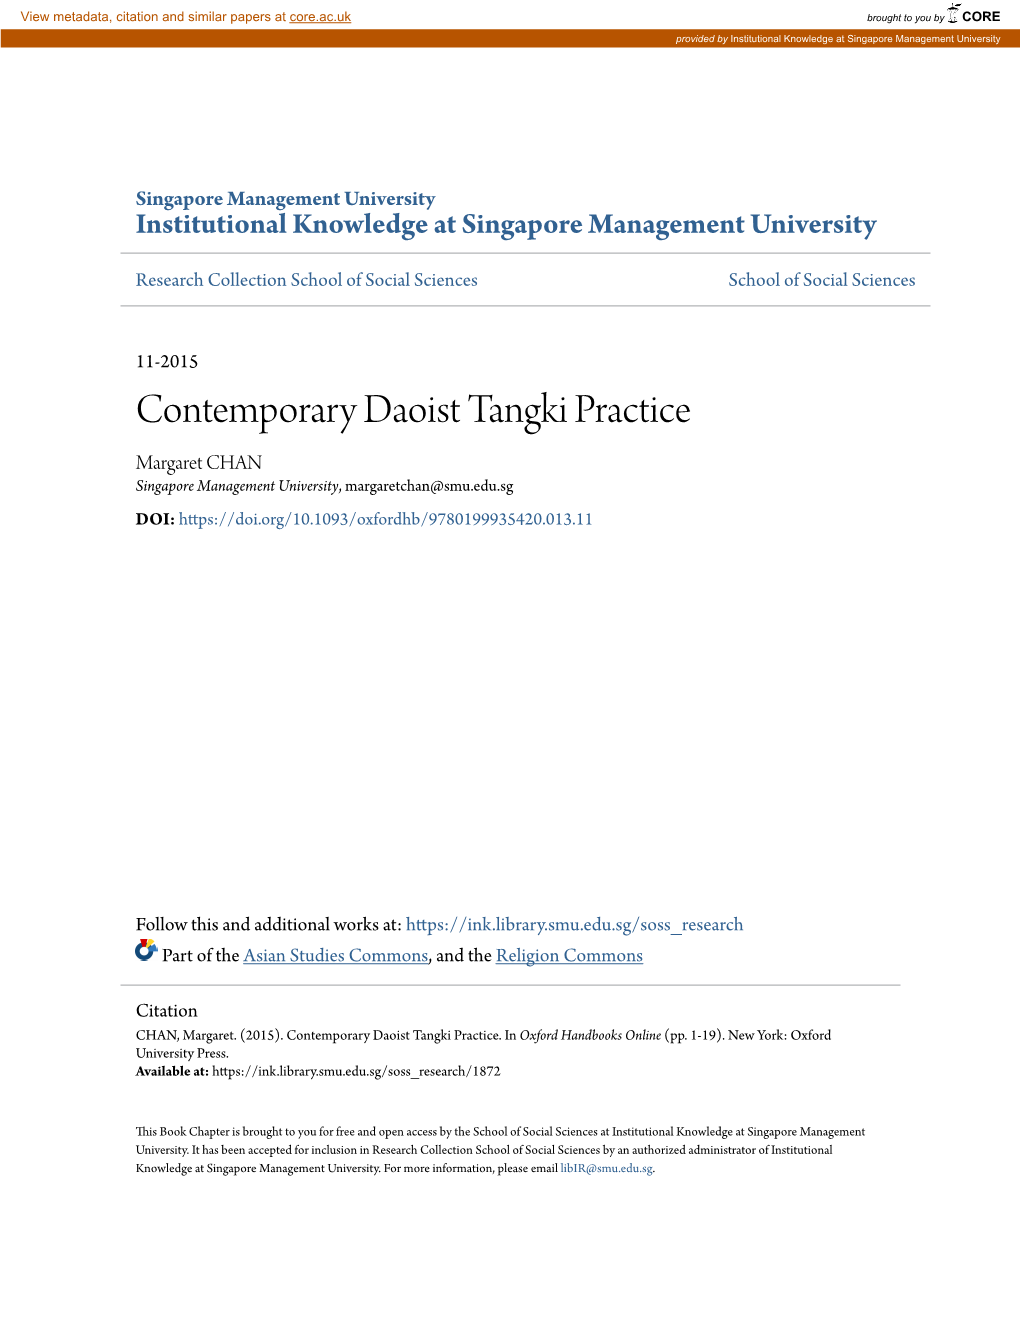 Contemporary Daoist Tangki Practice Margaret CHAN Singapore Management University, Margaretchan@Smu.Edu.Sg DOI